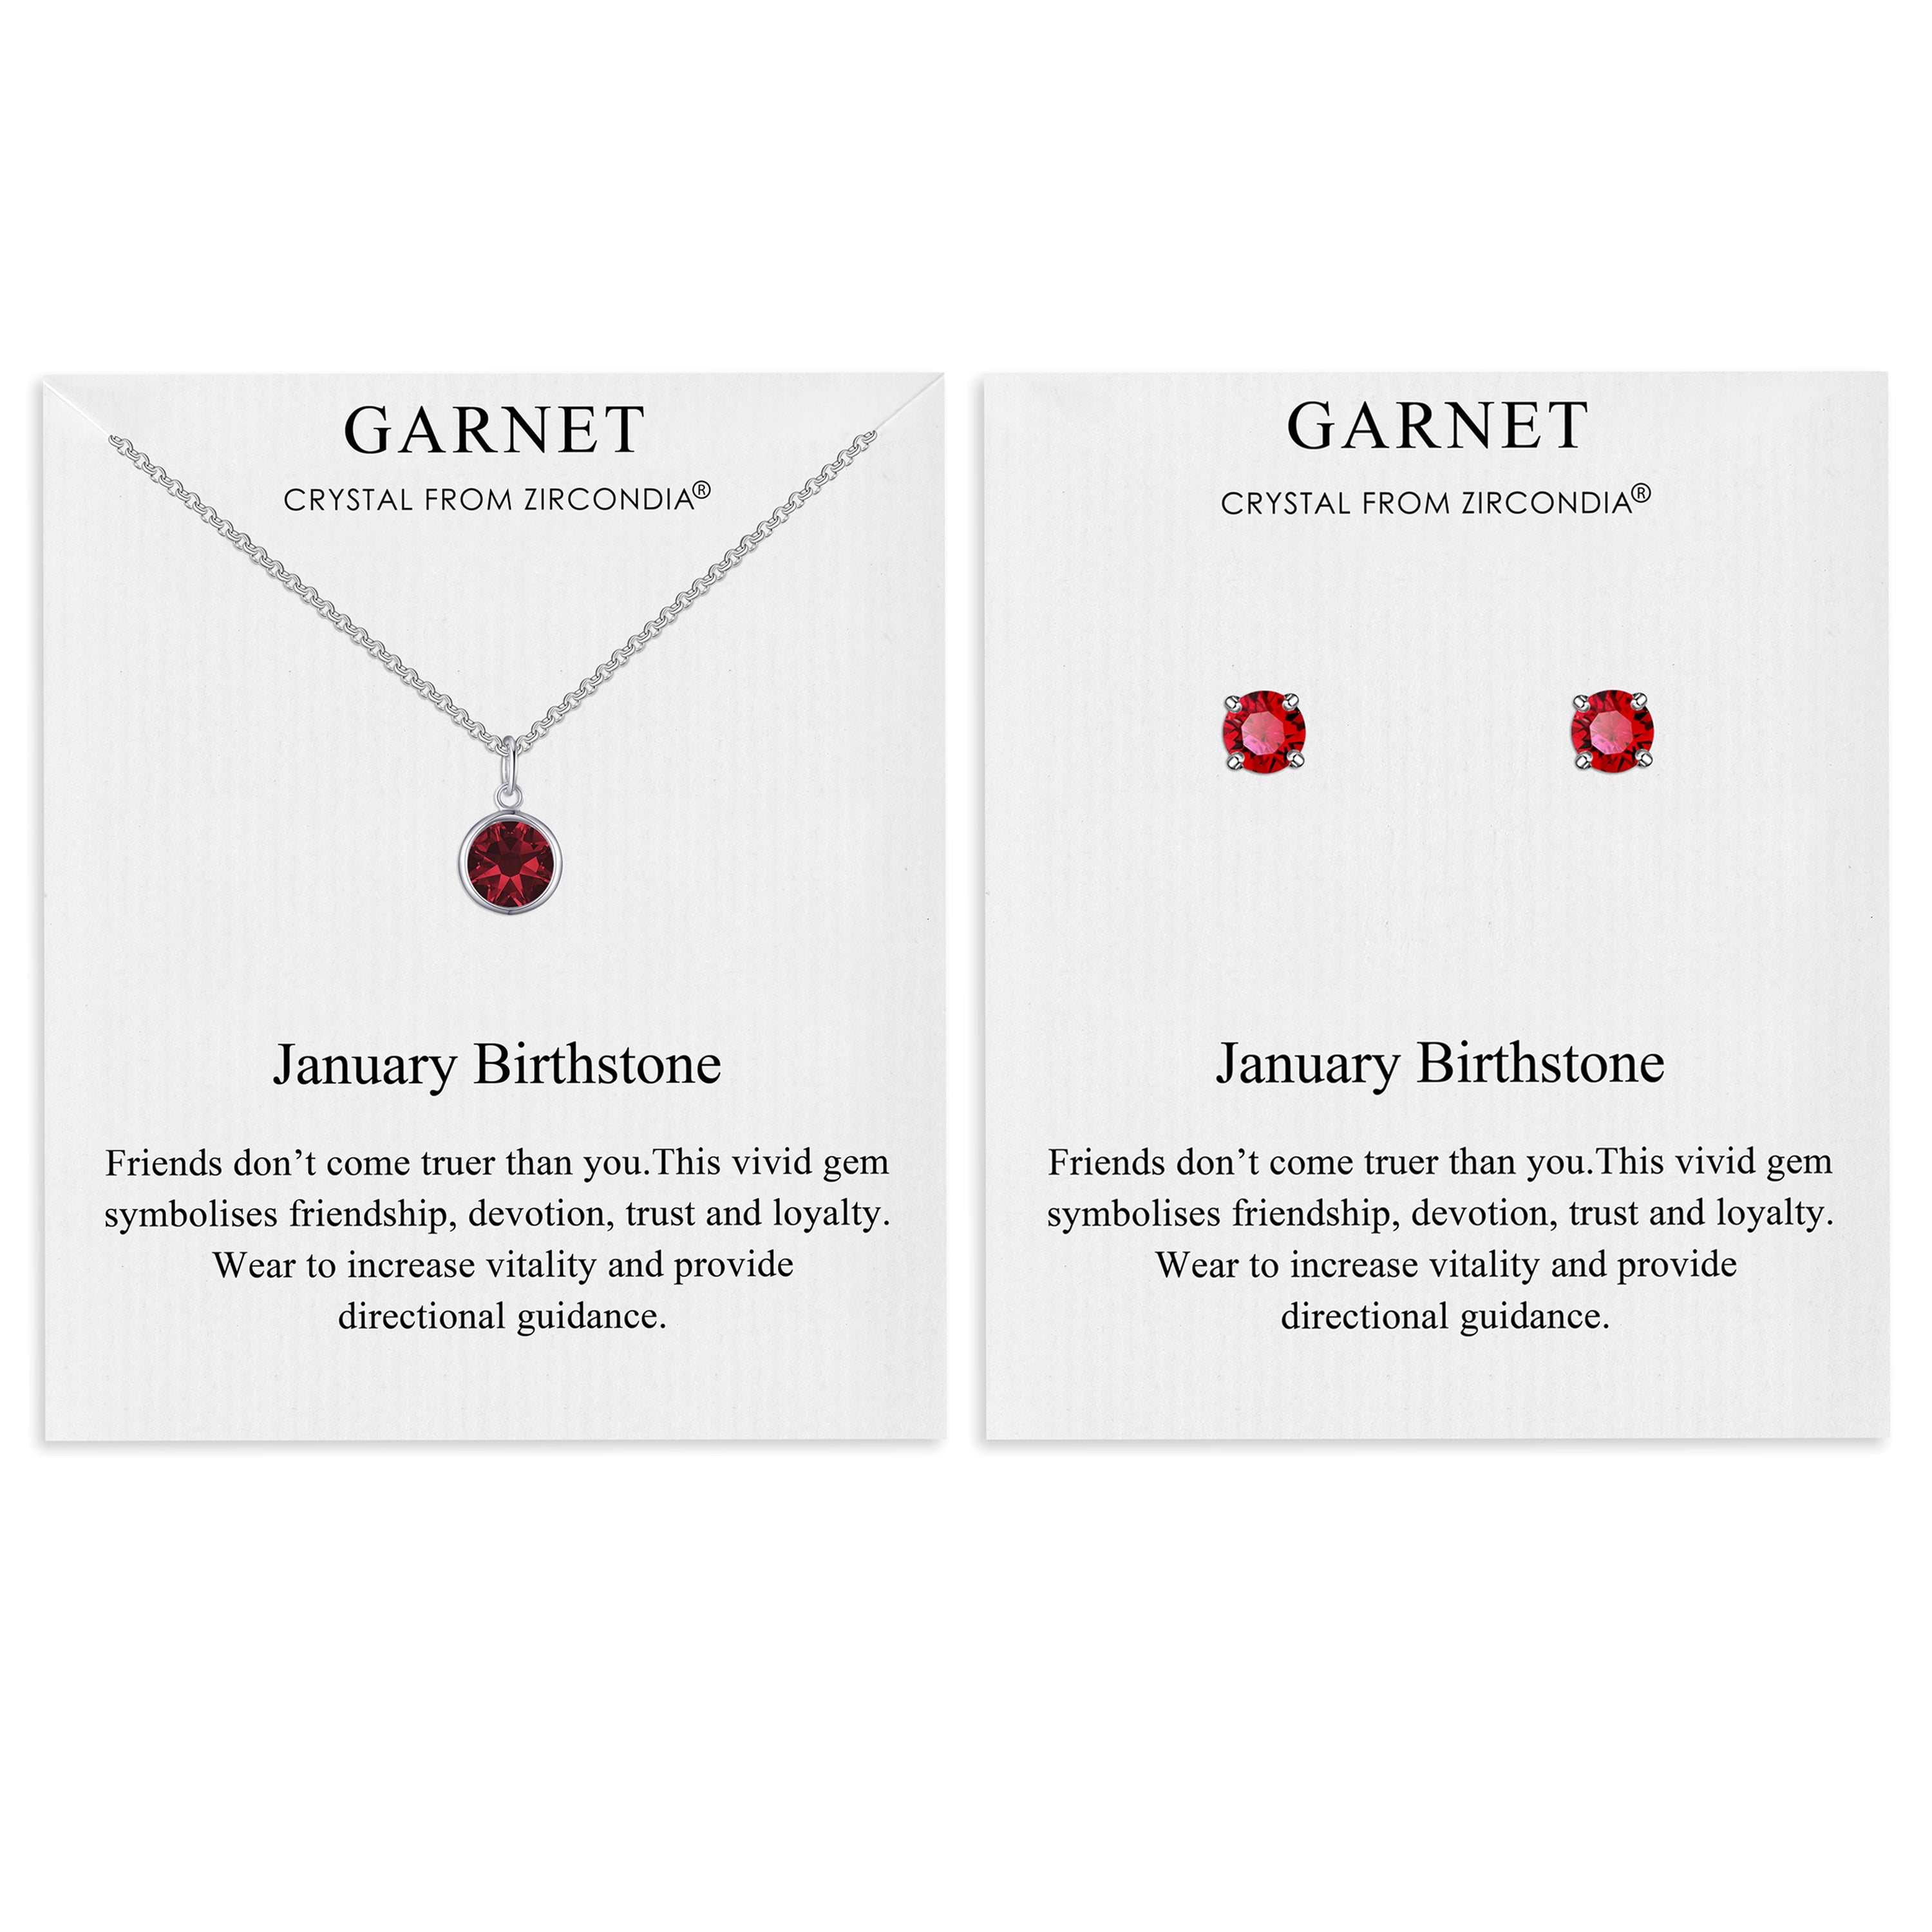 January (Garnet) Birthstone Necklace & Earrings Set Created with Zircondia® Crystals by Philip Jones Jewellery